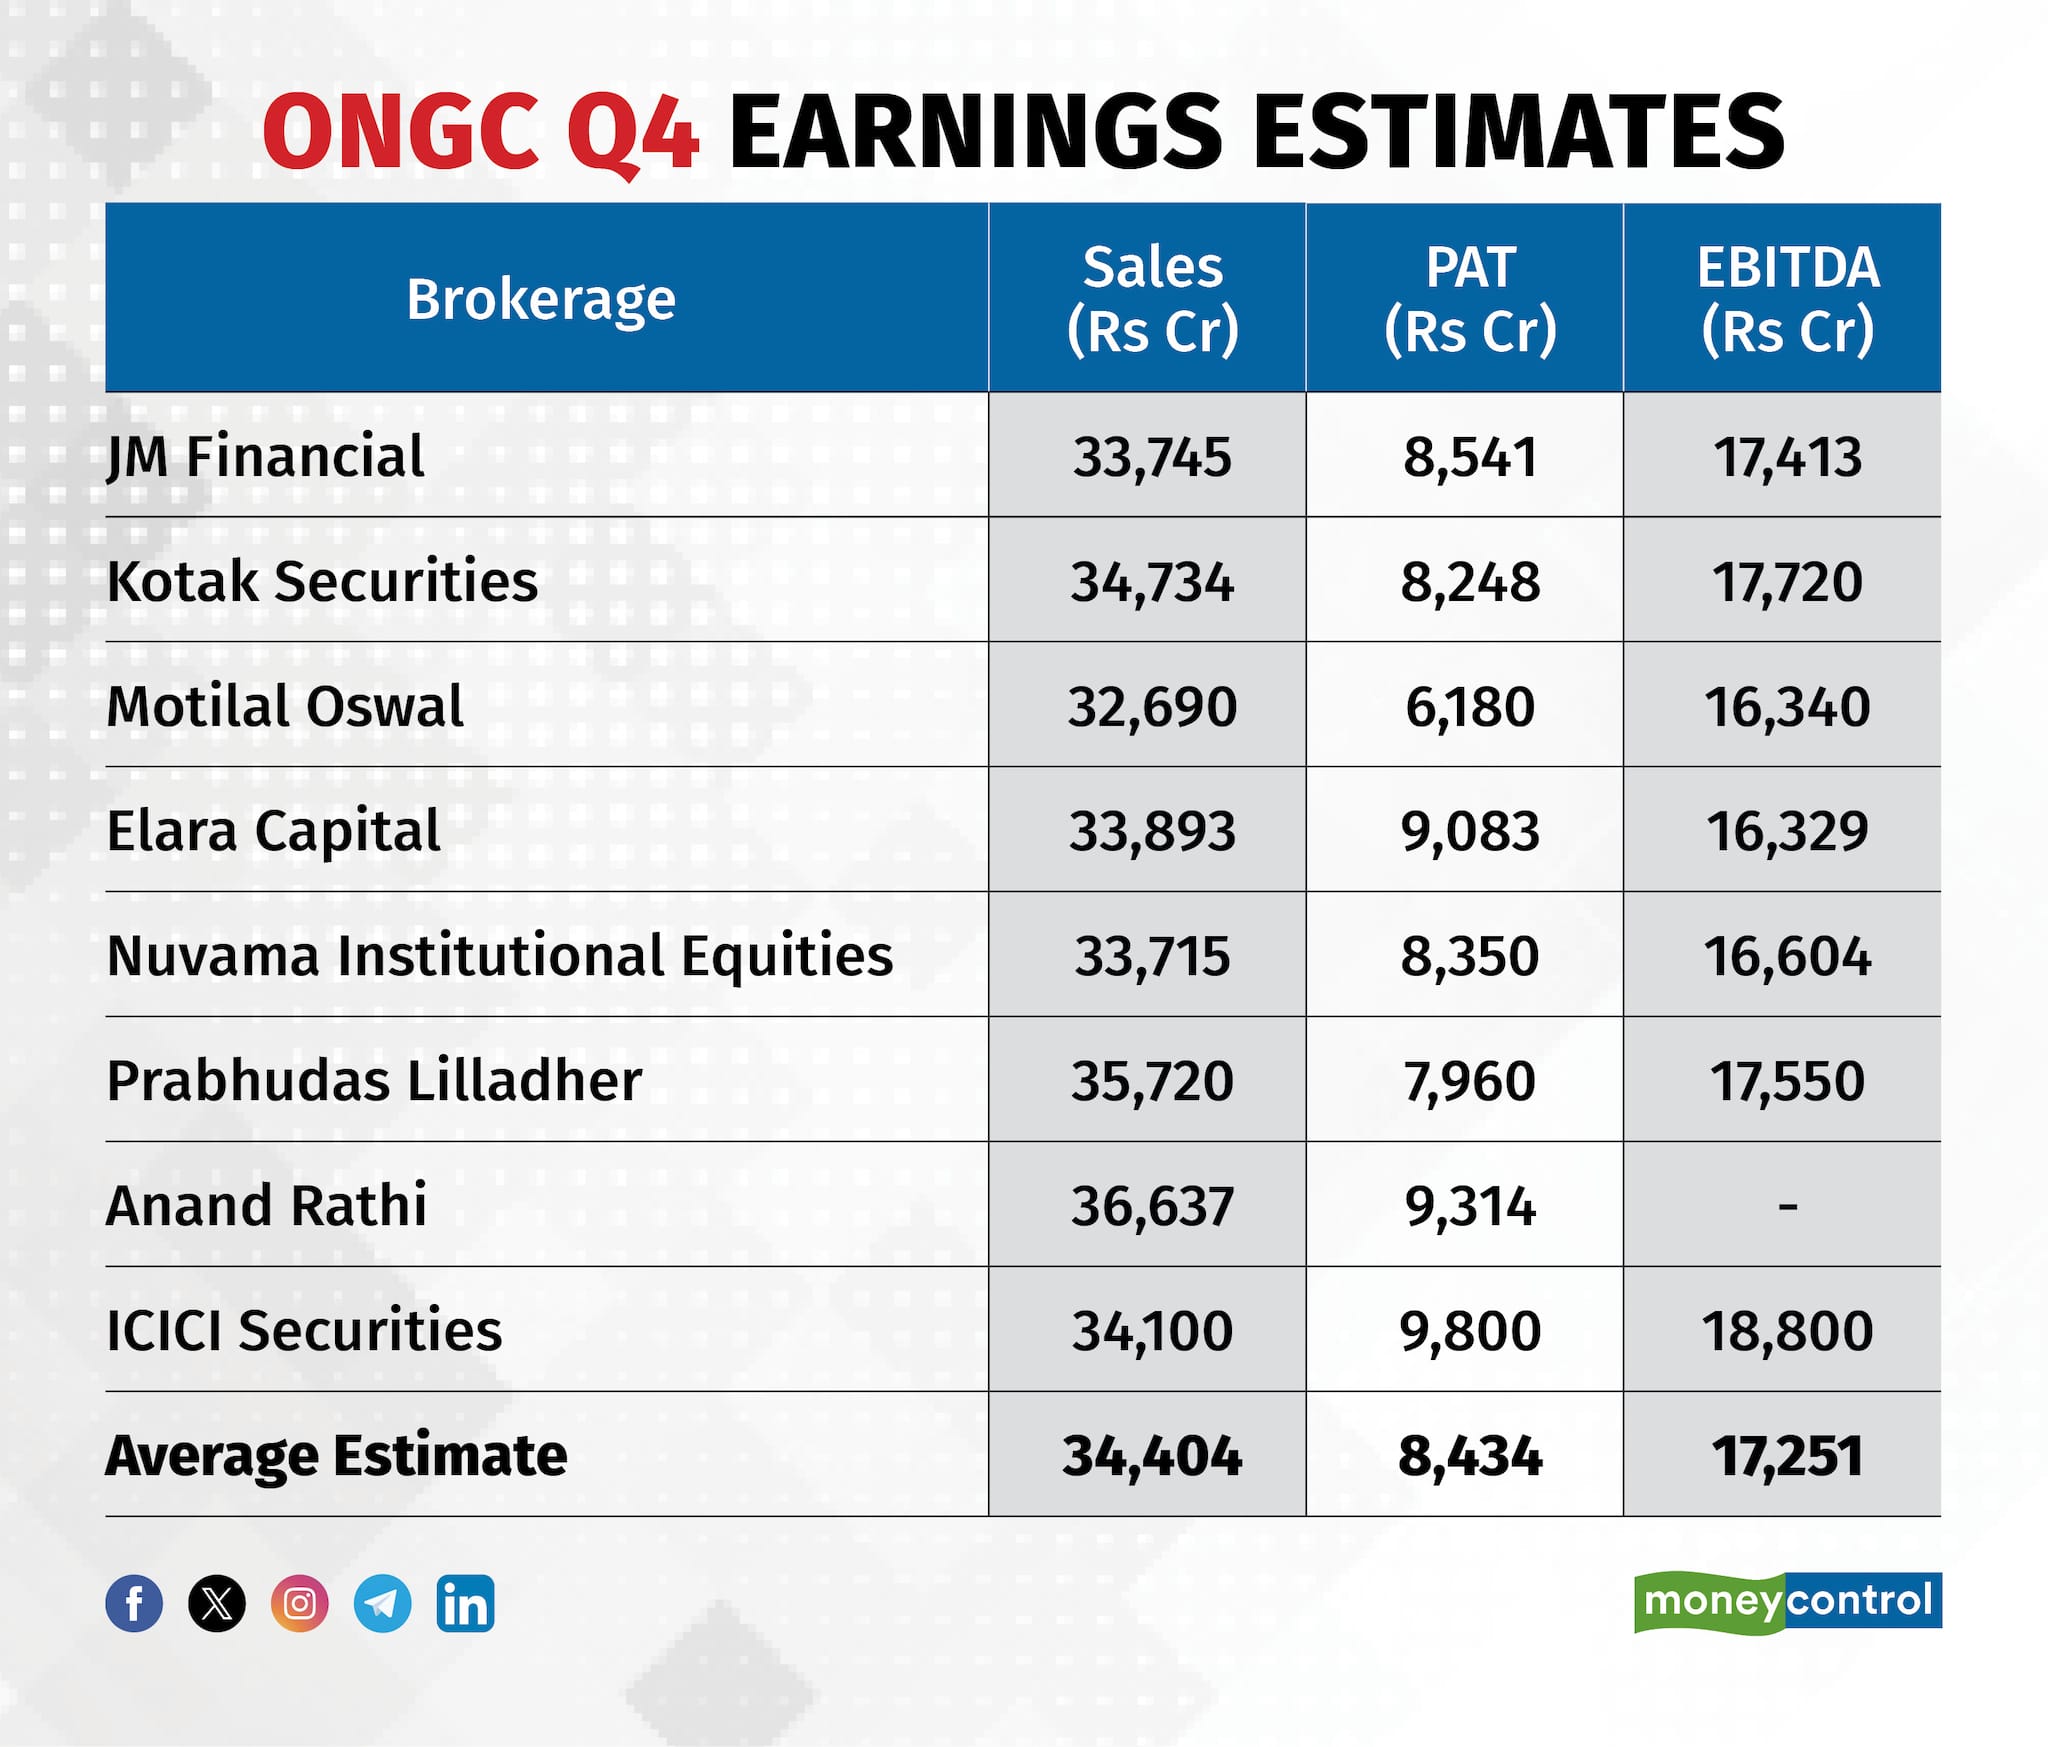 ONGC Q4 Earnings Estimates